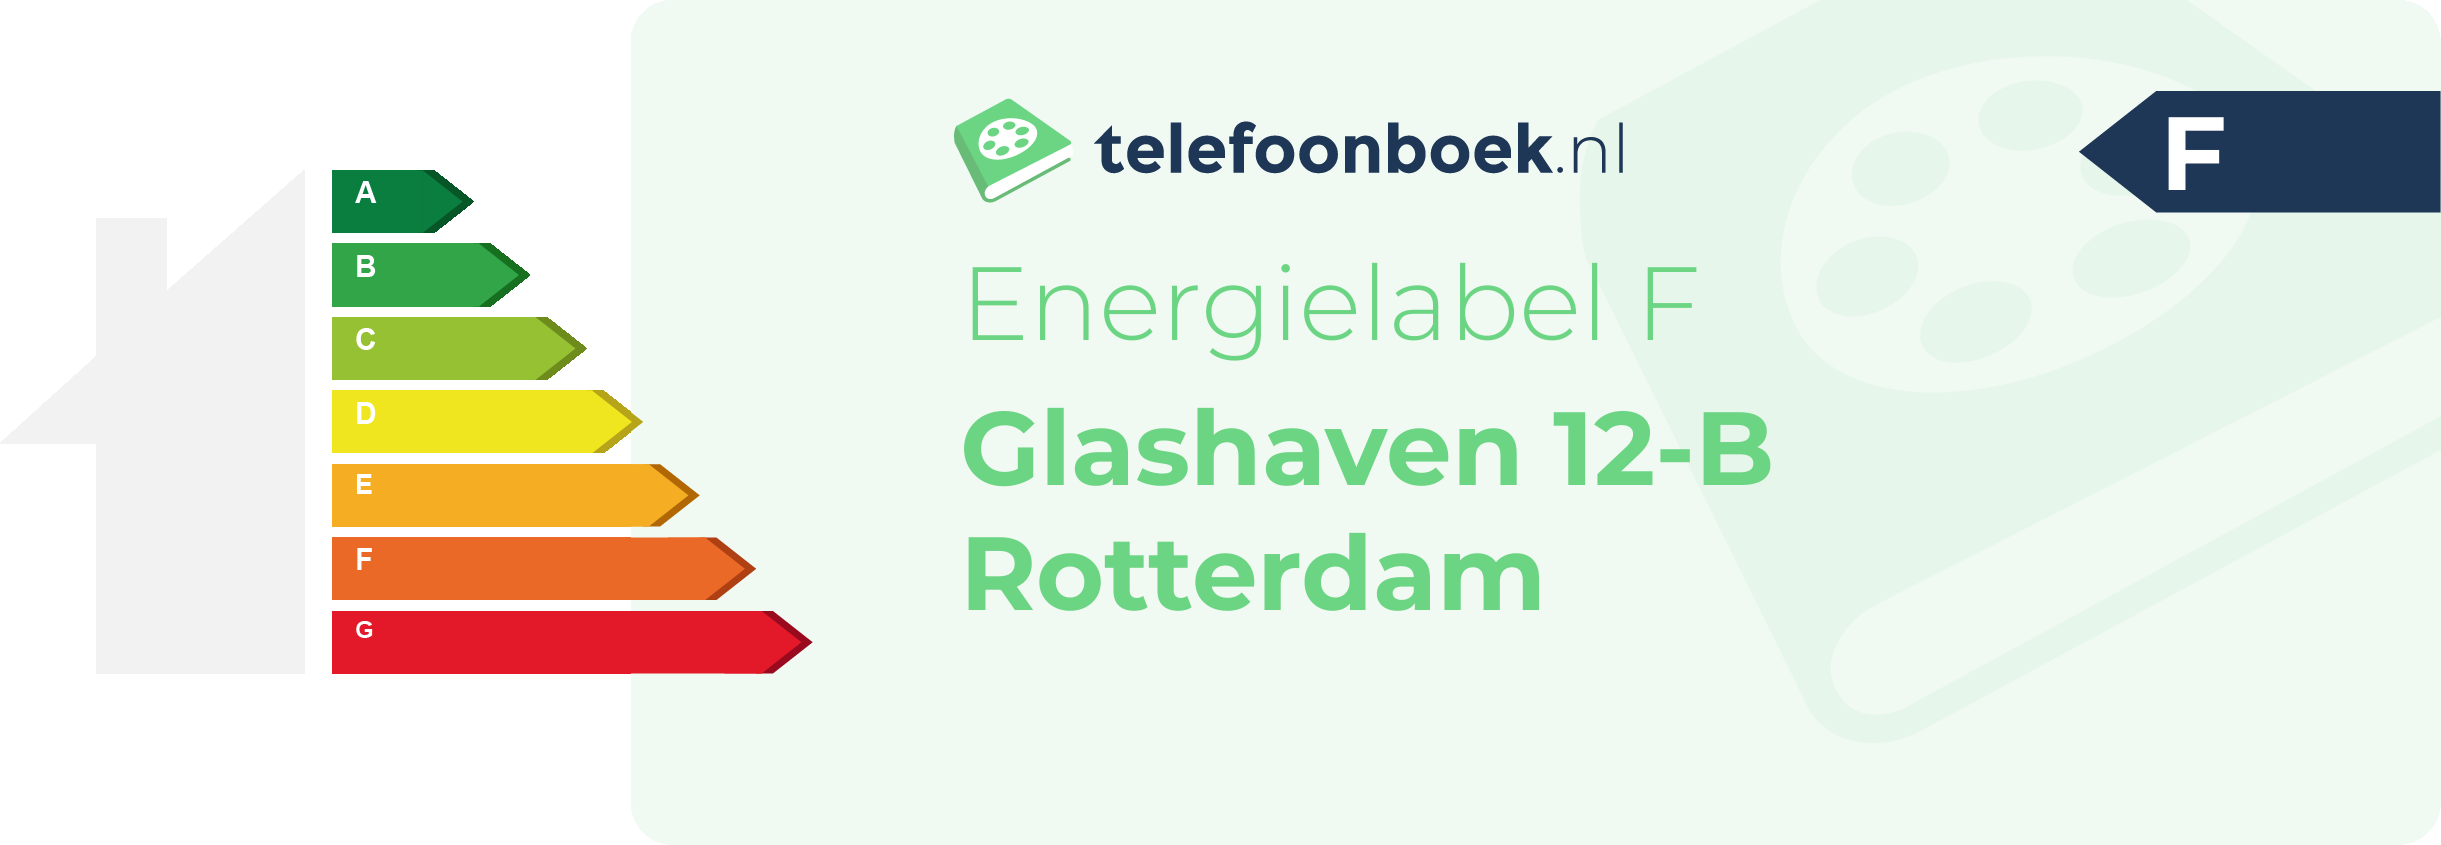 Energielabel Glashaven 12-B Rotterdam